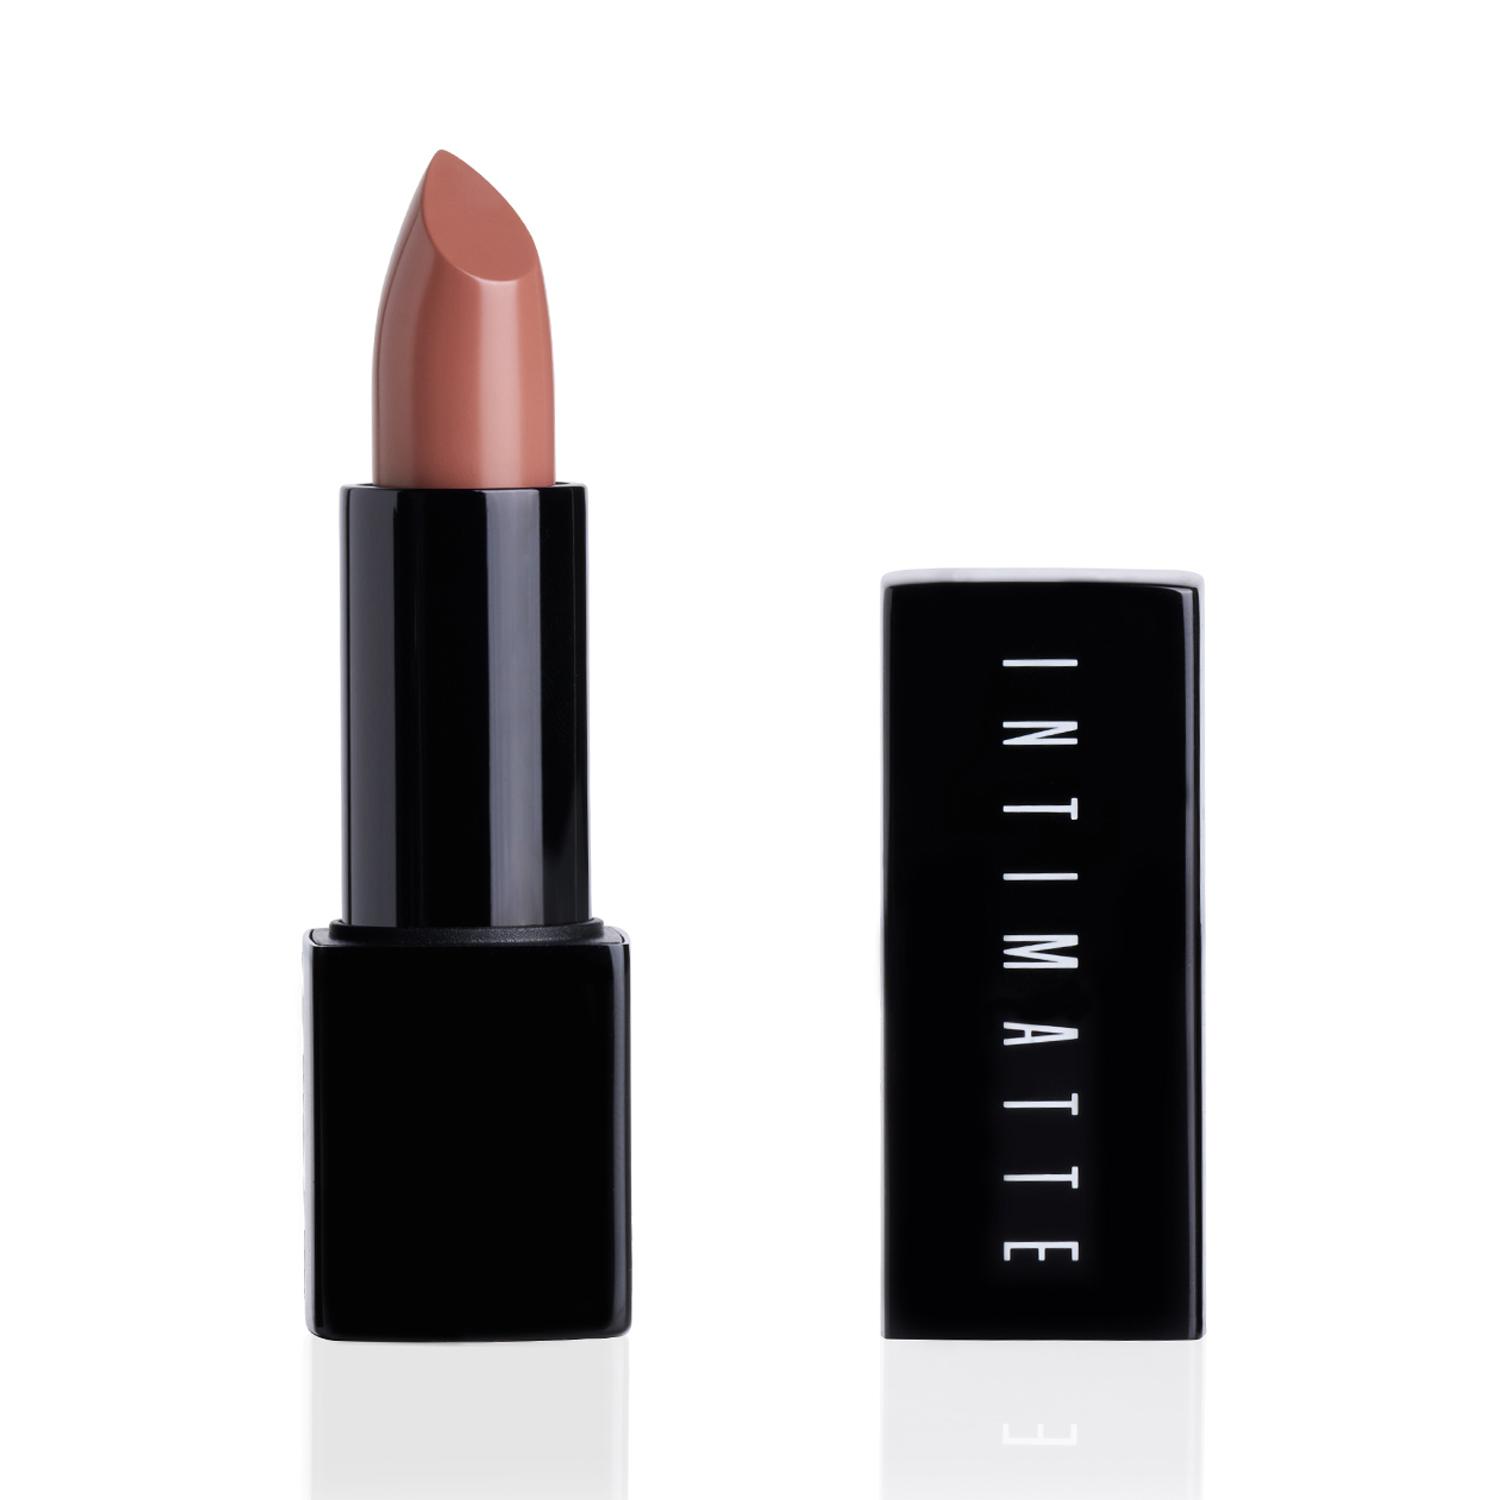 PAC | PAC Intimatte Lipstick - Peachy Addiction (4g)